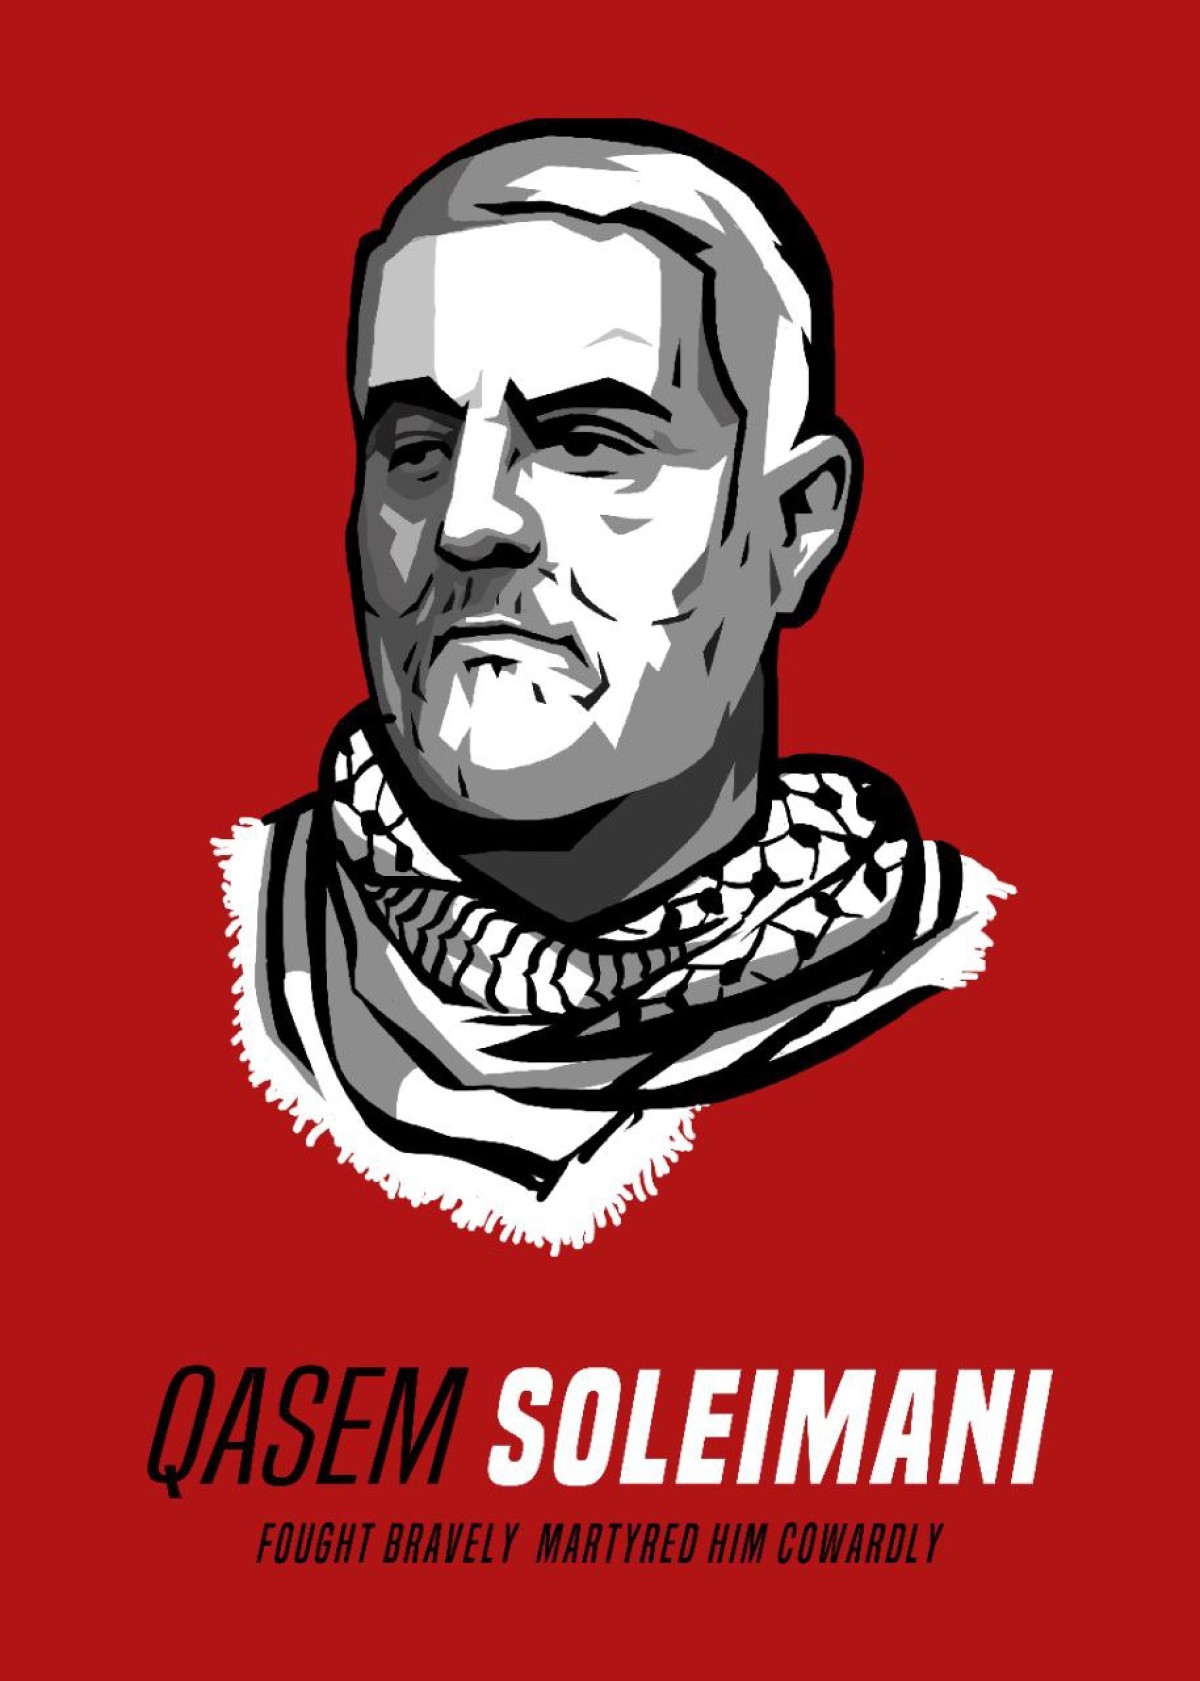  Ghasem Soleimani Fought Bravely Martyred him Cowardly